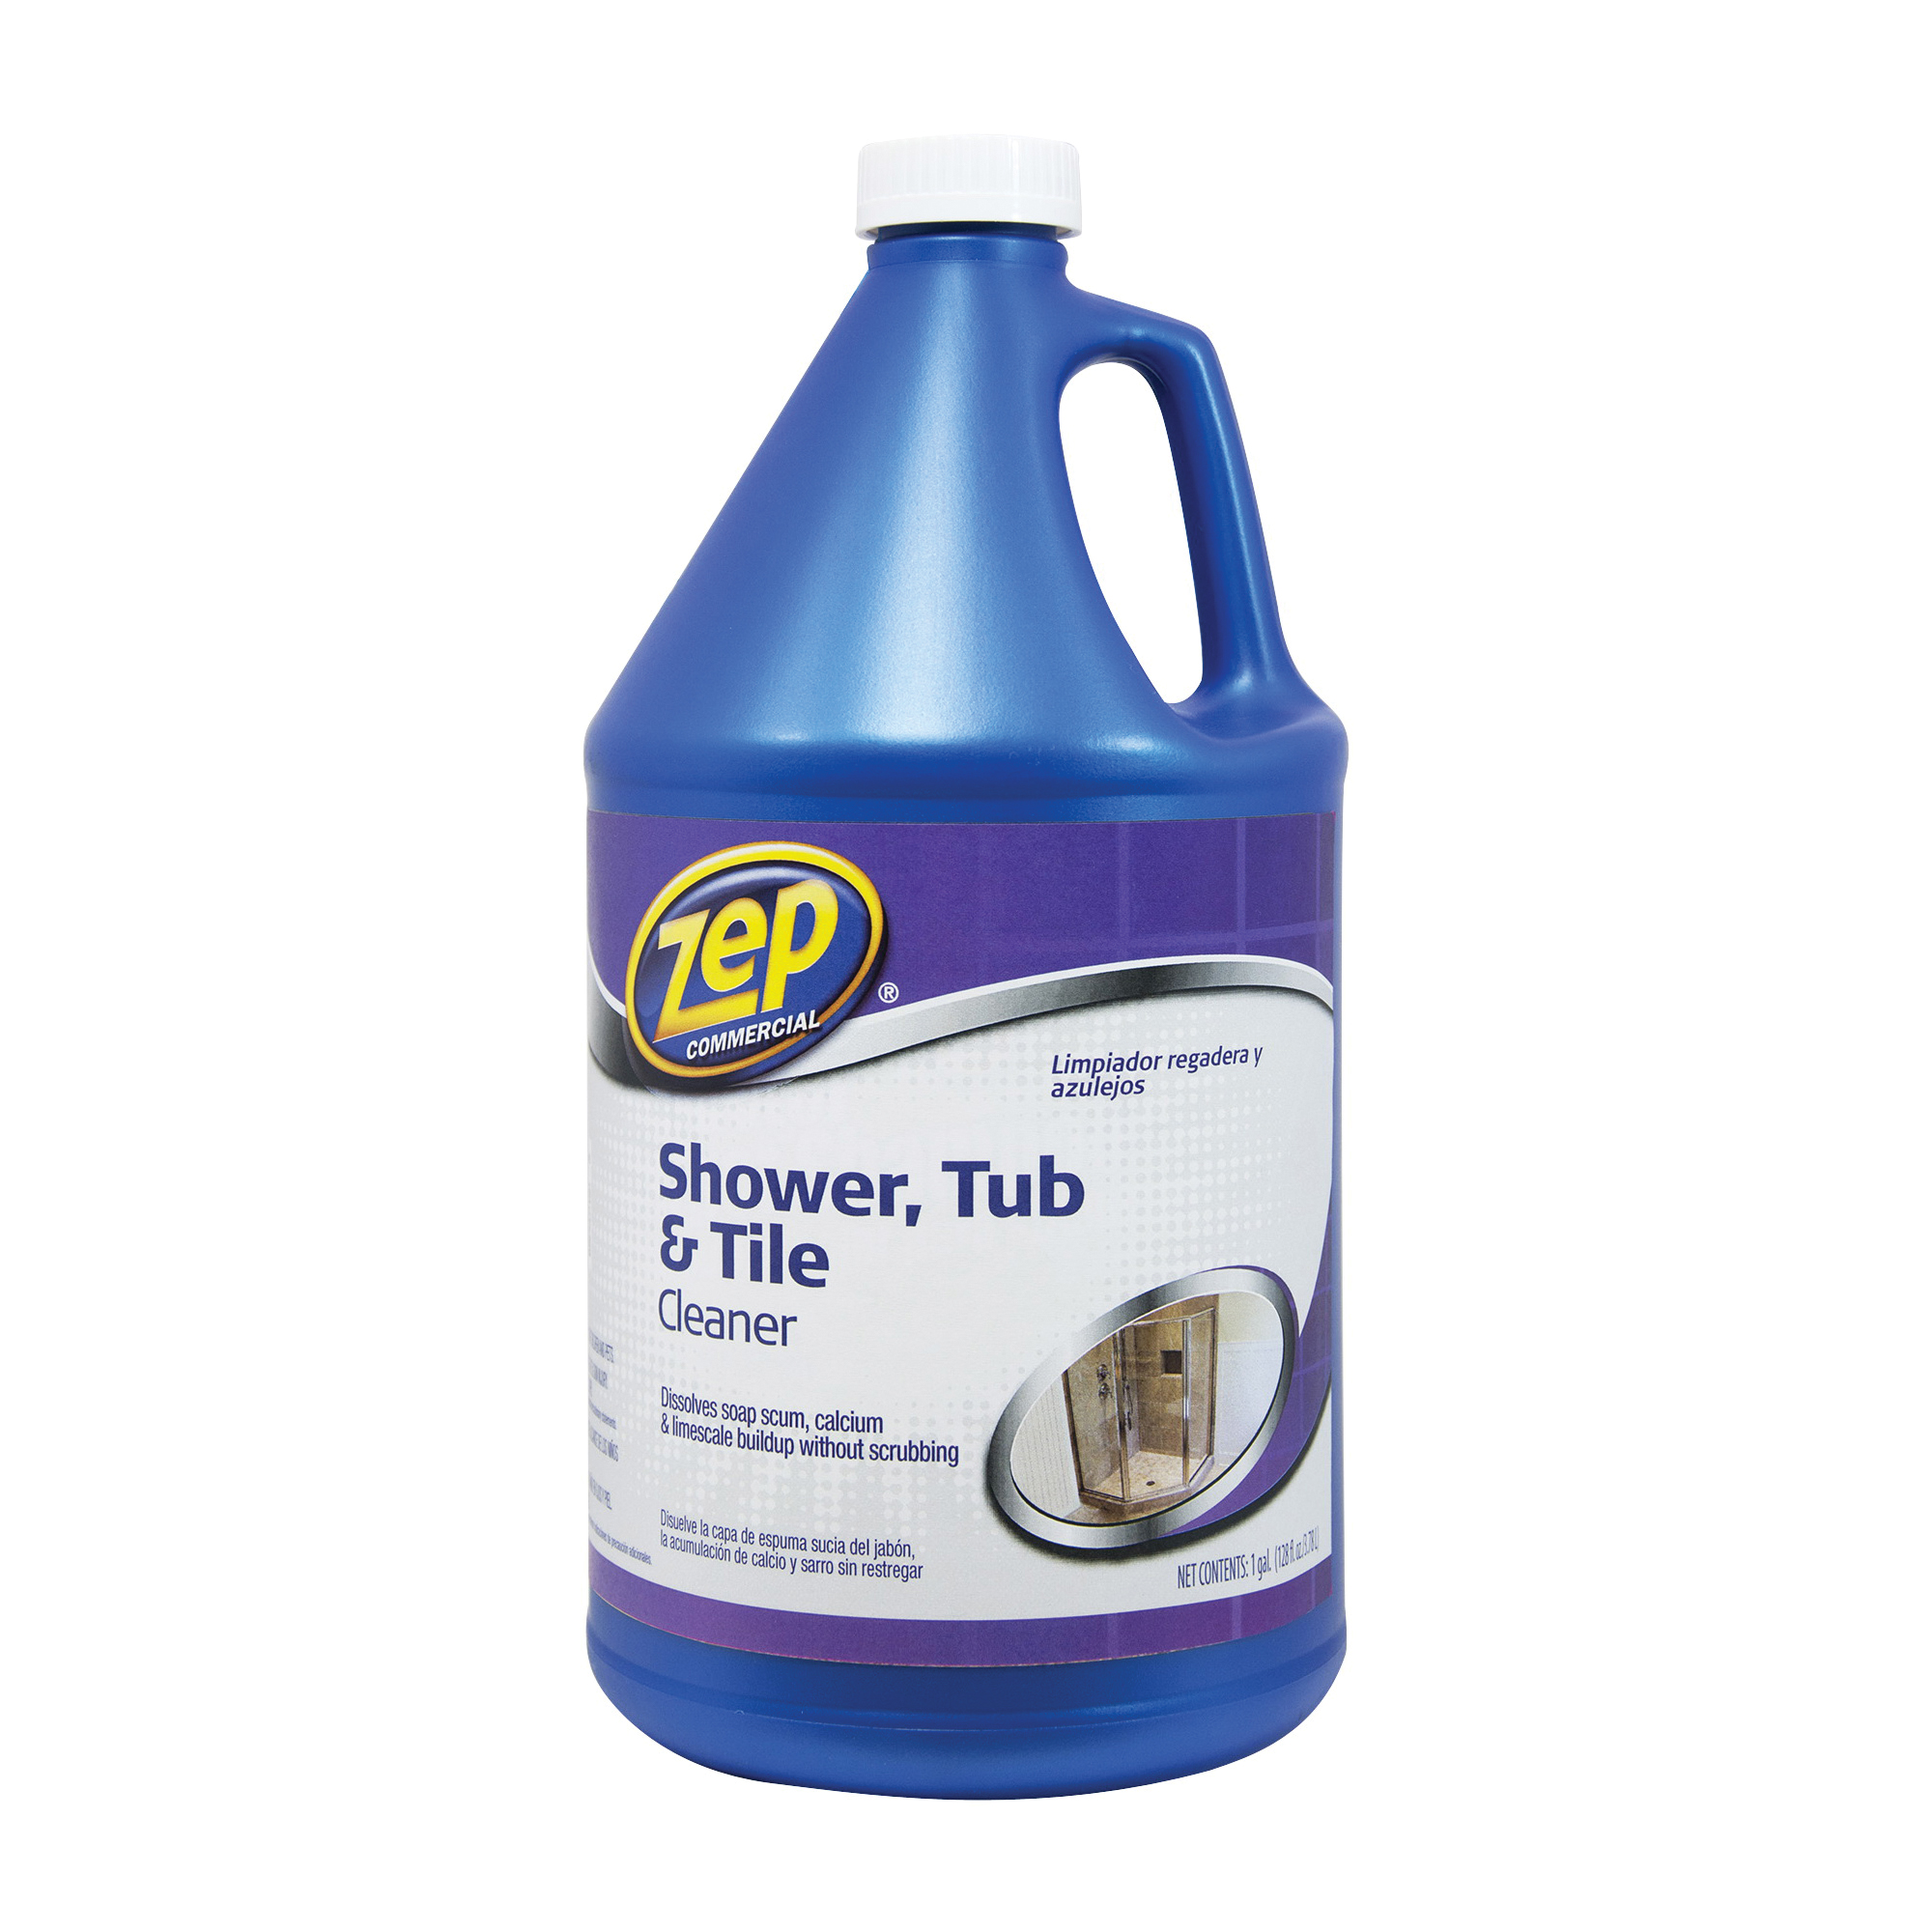 ZUSTT128 Shower Tub and Tile Cleaner, 1 gal Bottle, Liquid, Pleasant, Light Yellow